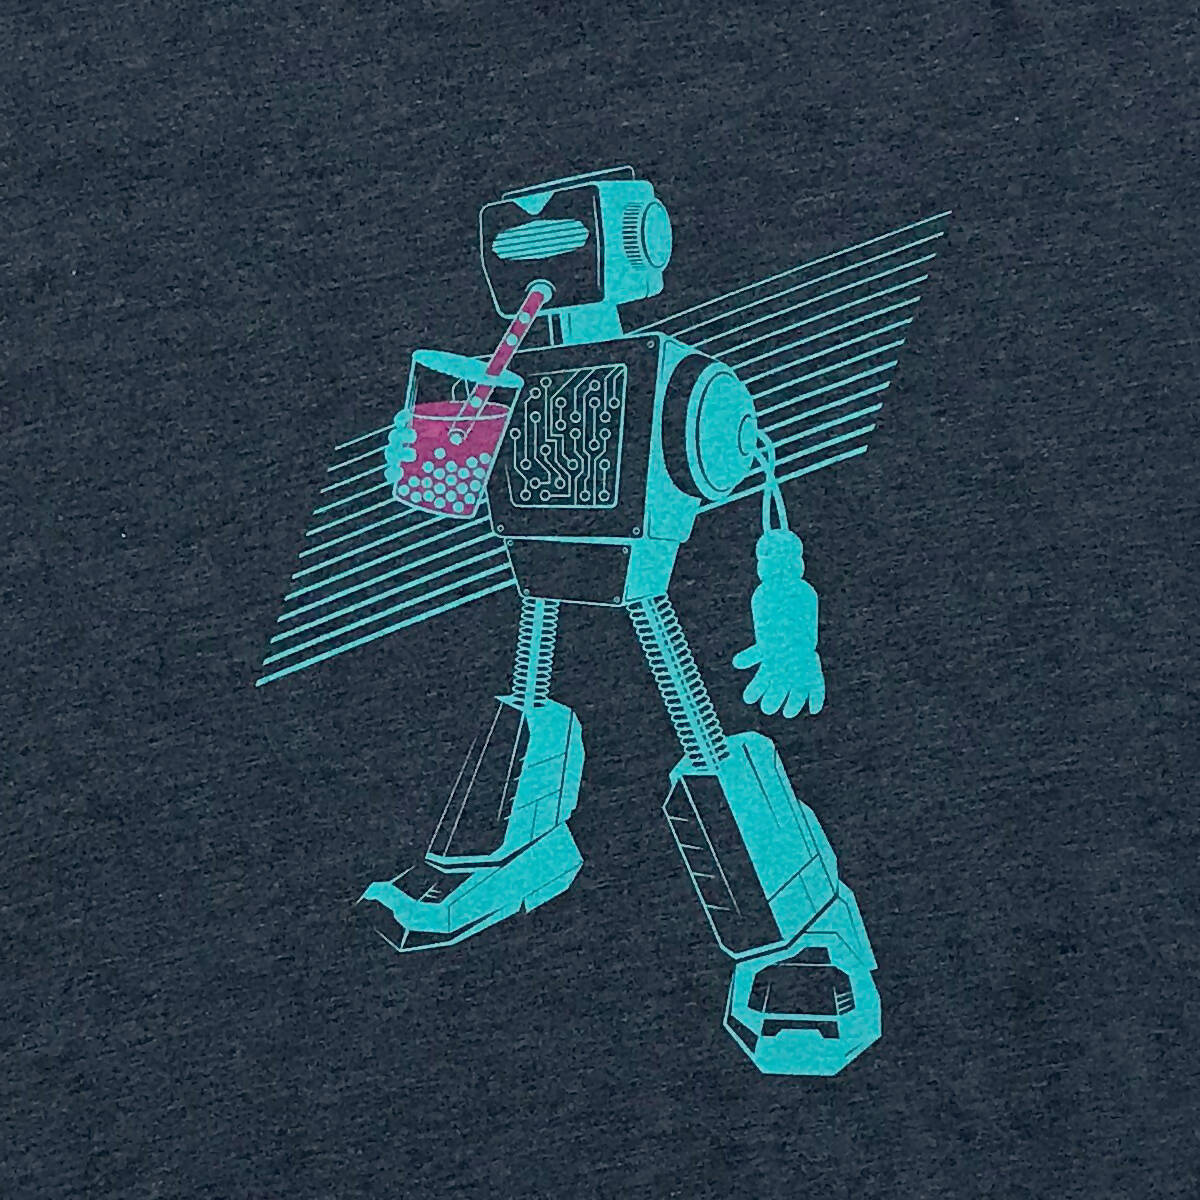 BOBA BOT - Boba Tea Robot Graphic T-shirt